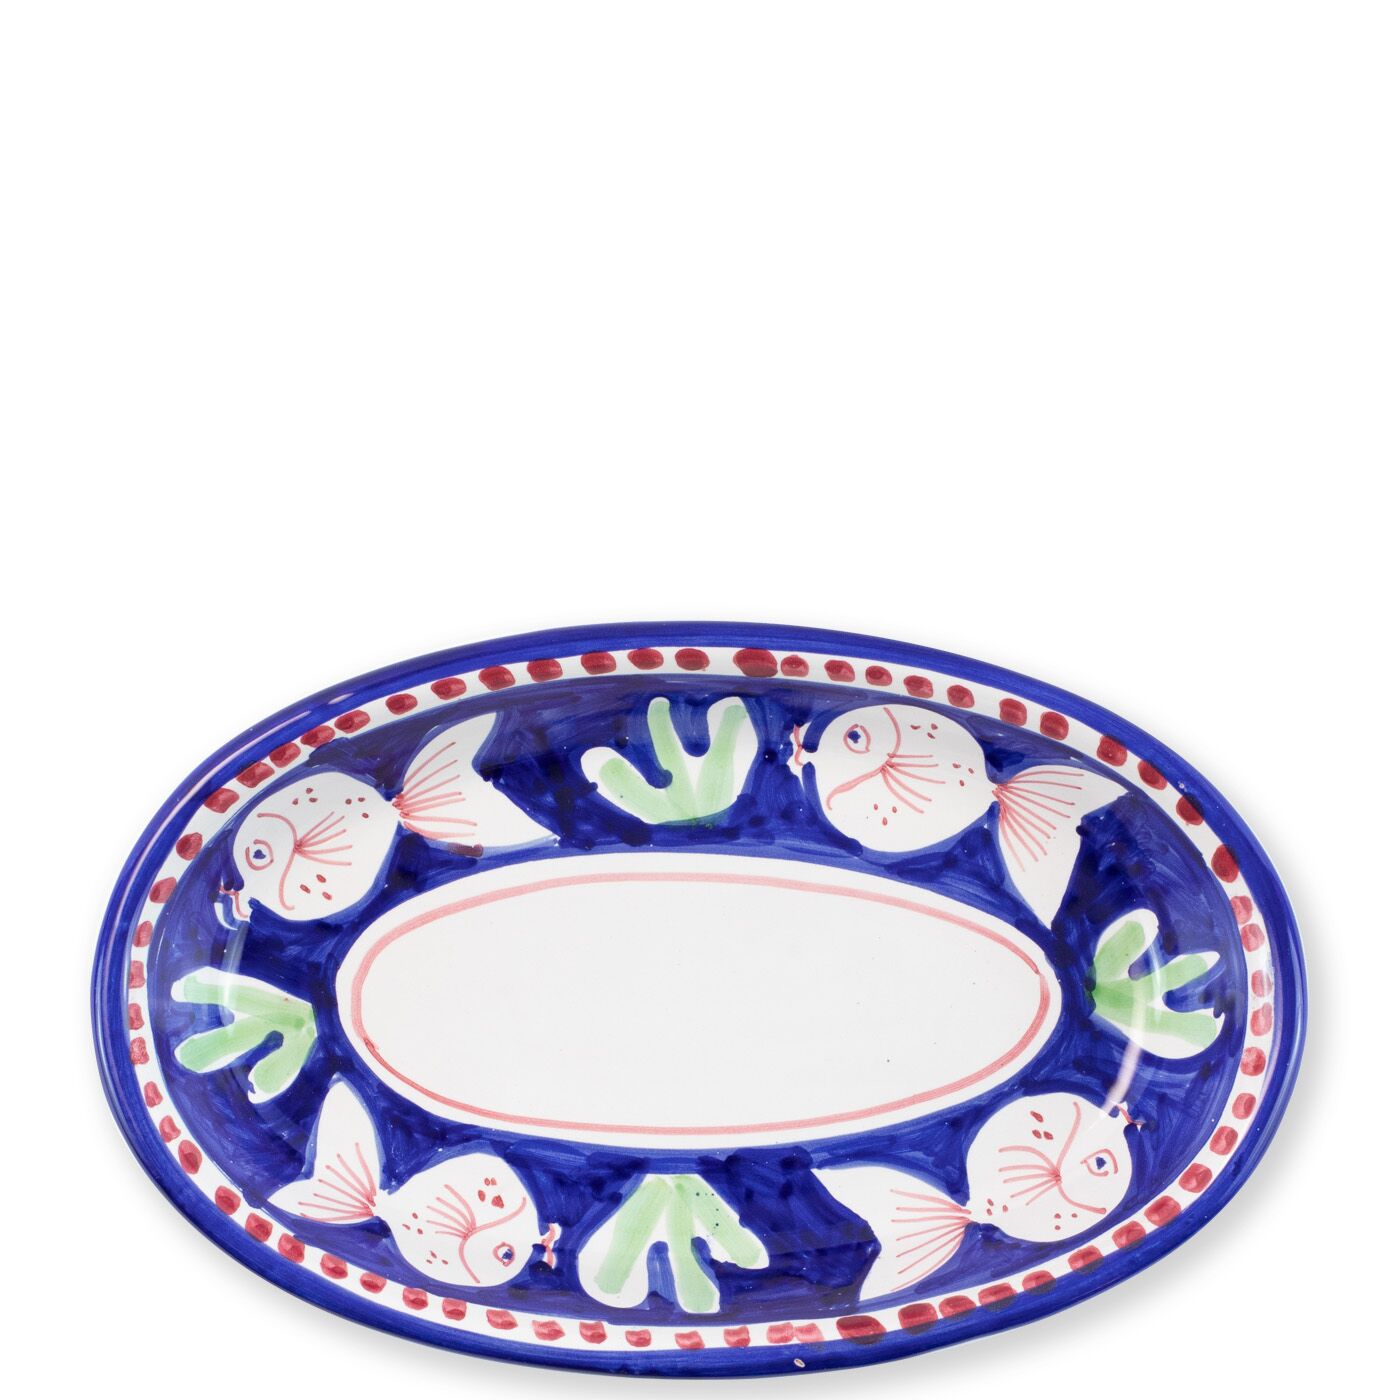 Vietri Campagna Pesce Small Oval Tray, Terra Cotta Serving Platter, Table Decor